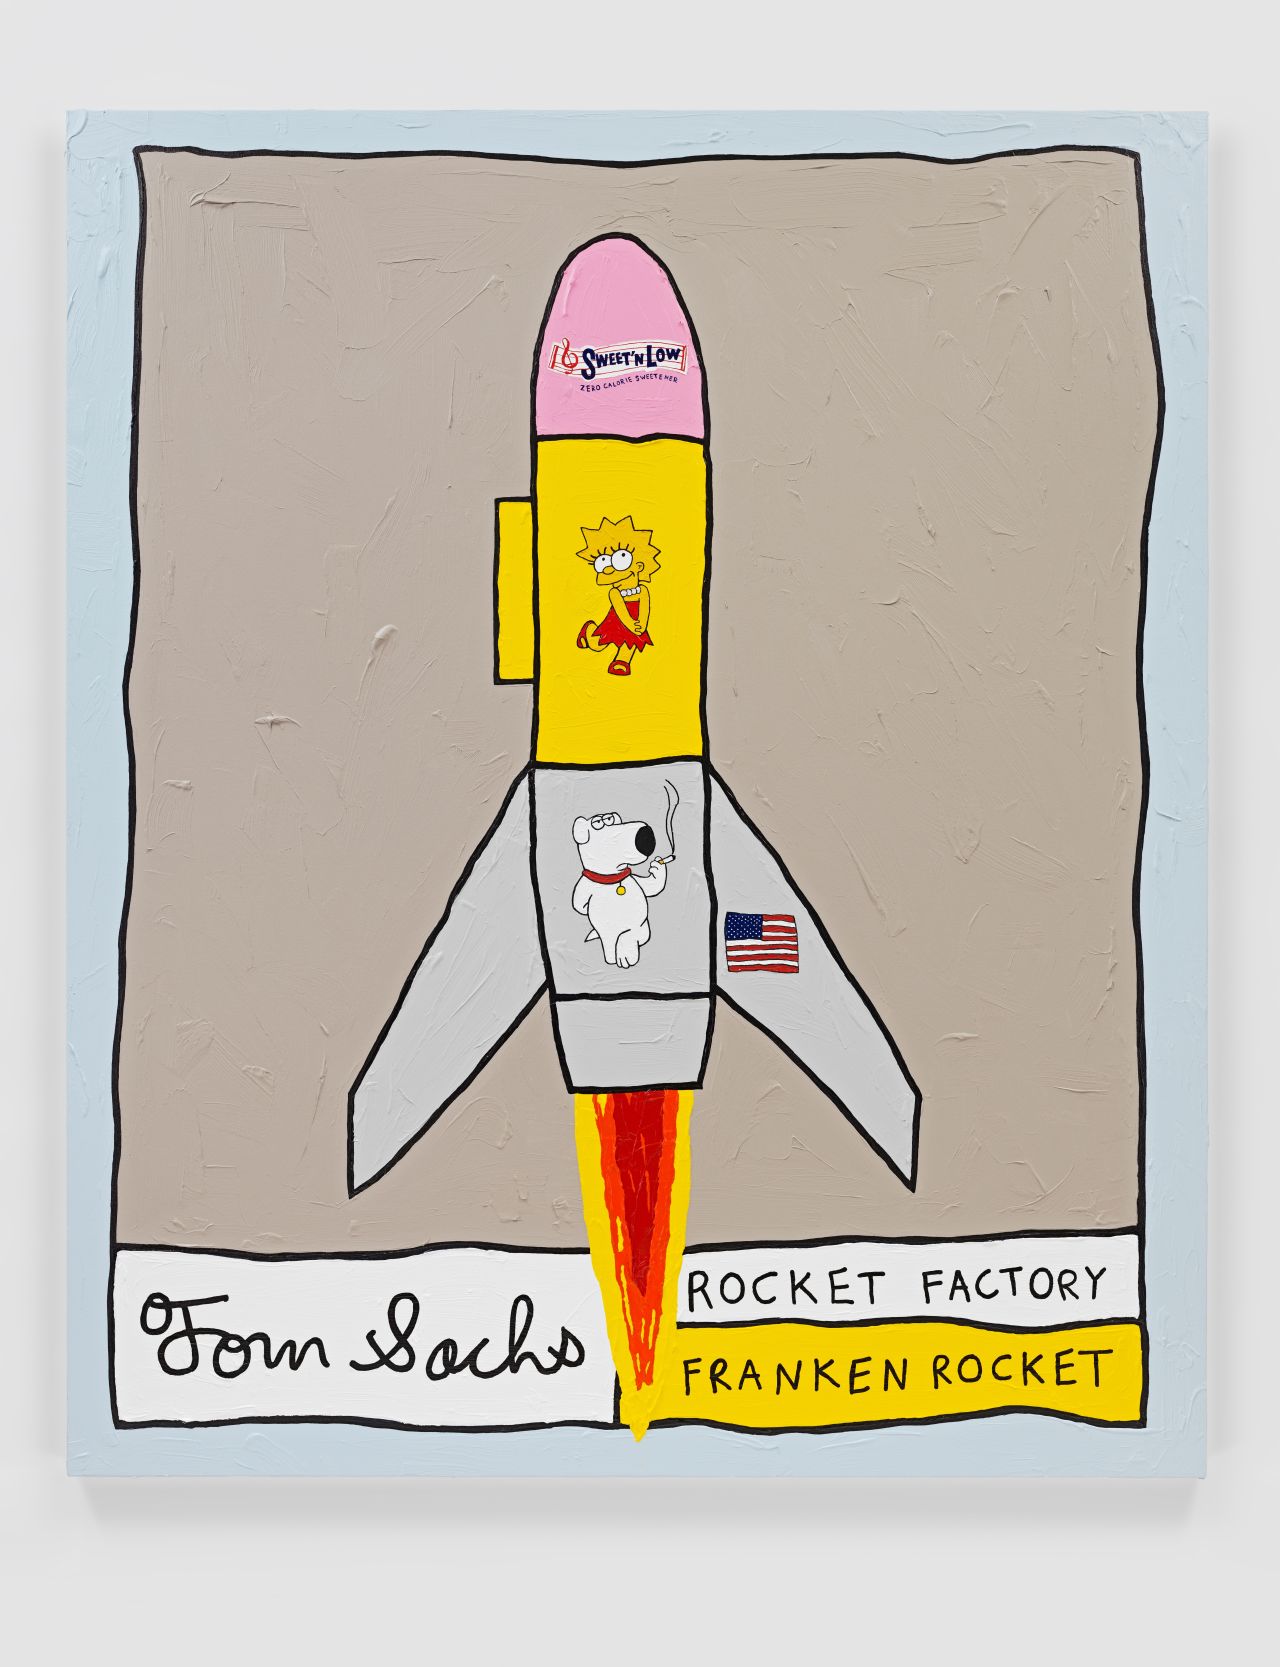 Tom Sachs Space Program: Indoctrination